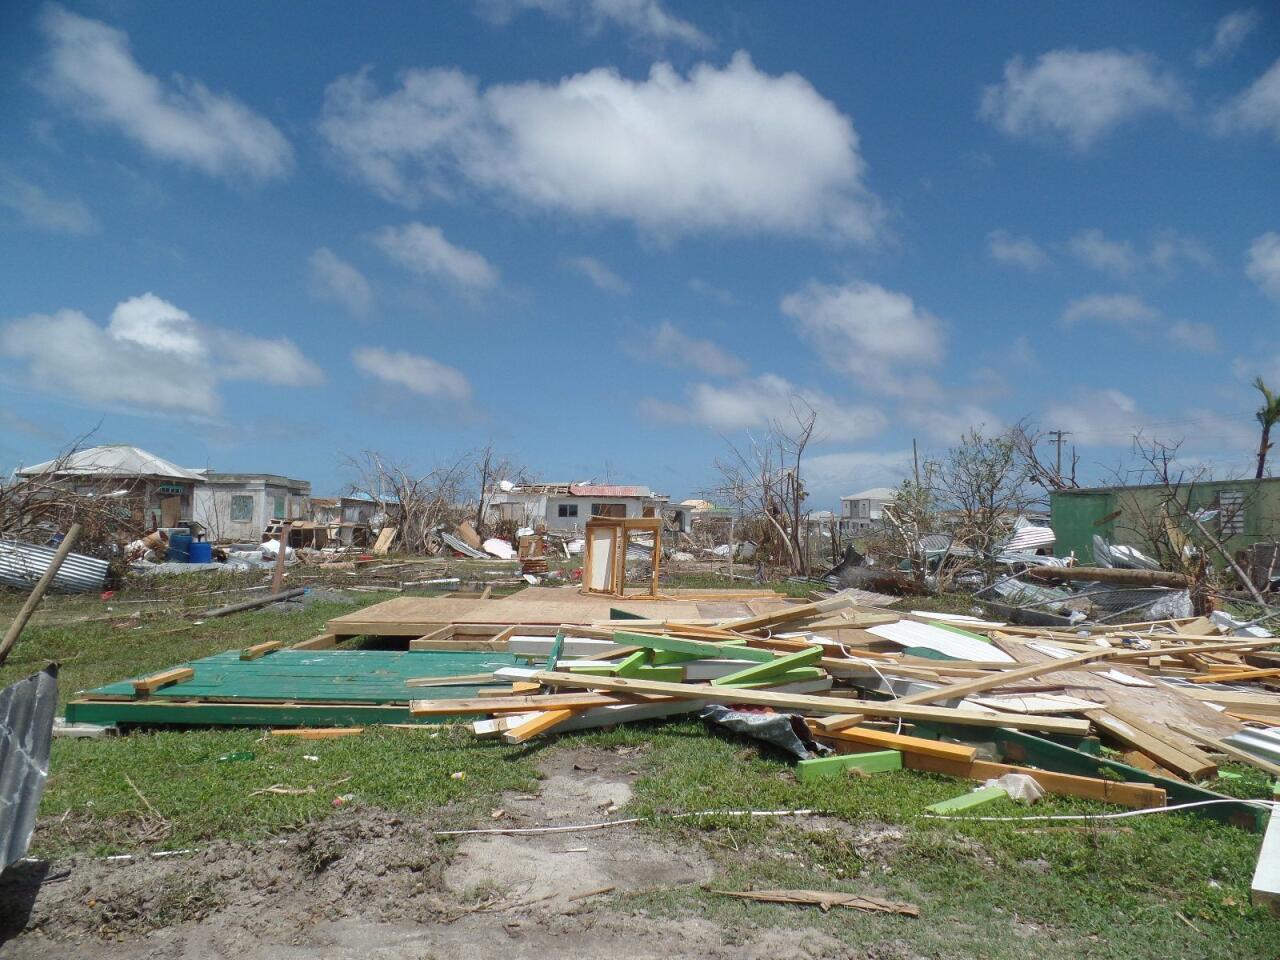 Damage left behind by Hurricane Irma in Codrington, Antigua and Barbuda, on Sept. 9, 2017.